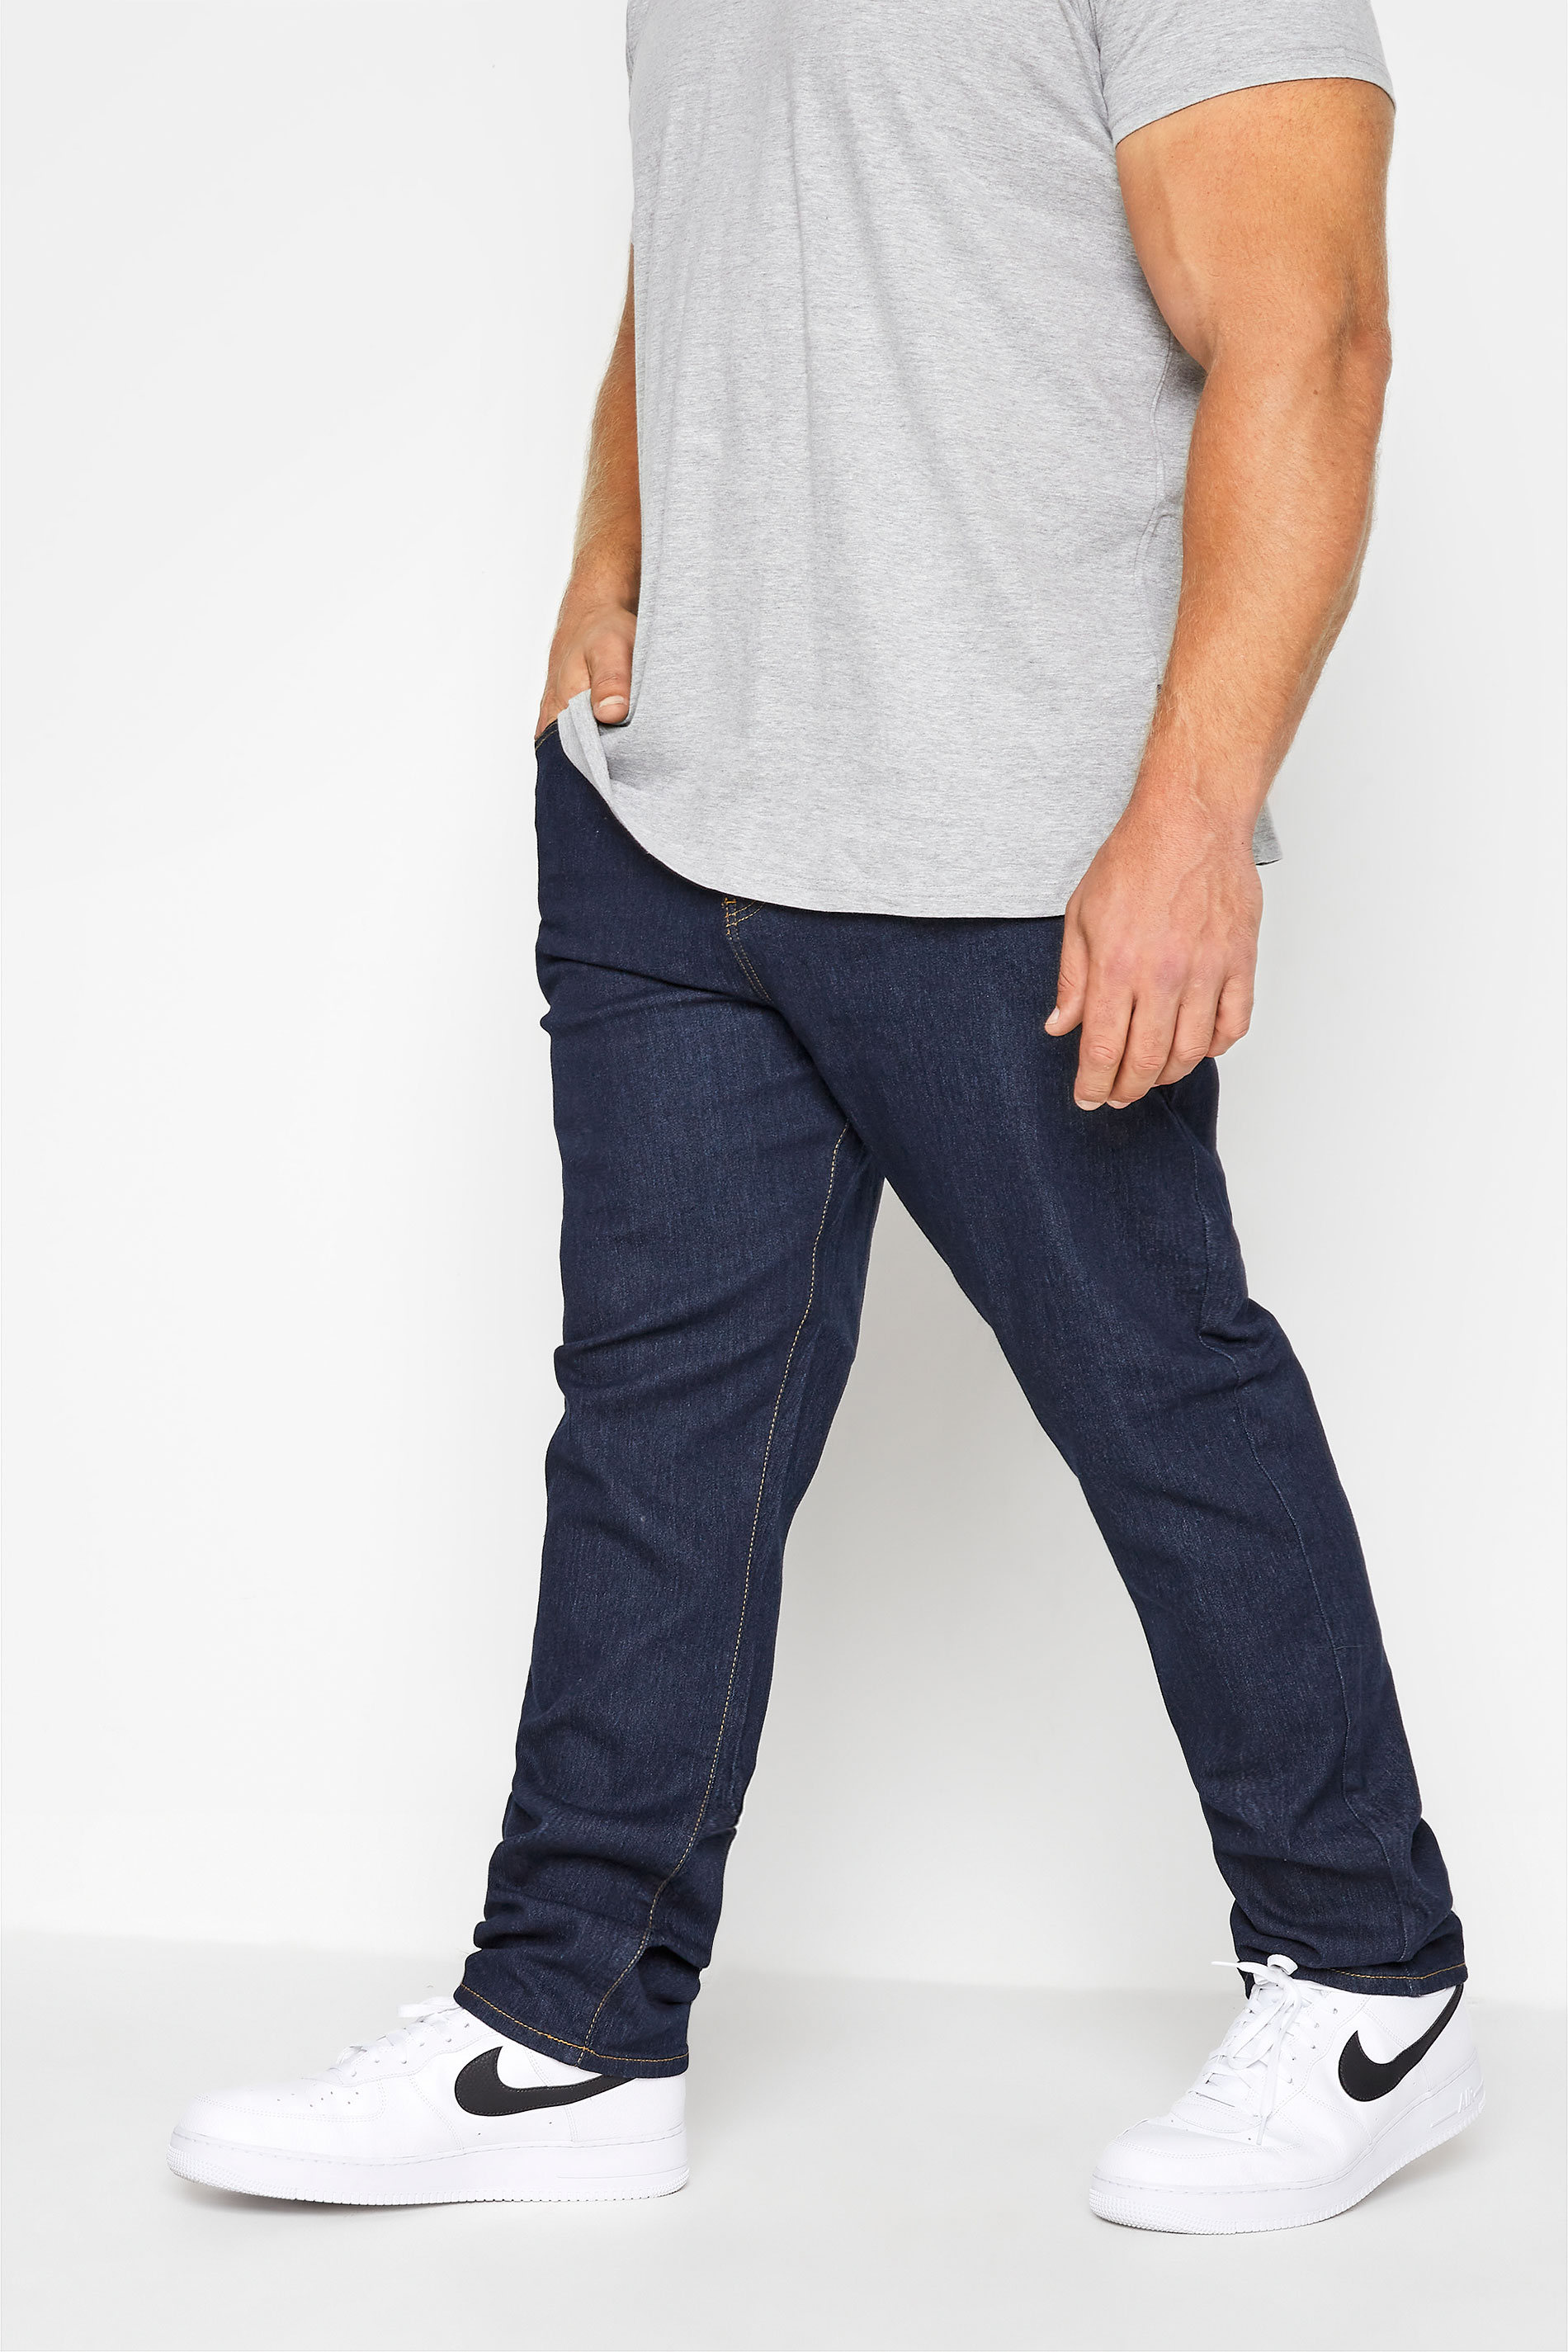 Image of Inside Leg Size 29", Waist Size 42 Mens Kam Big & Tall Indigo Blue Regular Fit Stretch Jeans Big & Tall